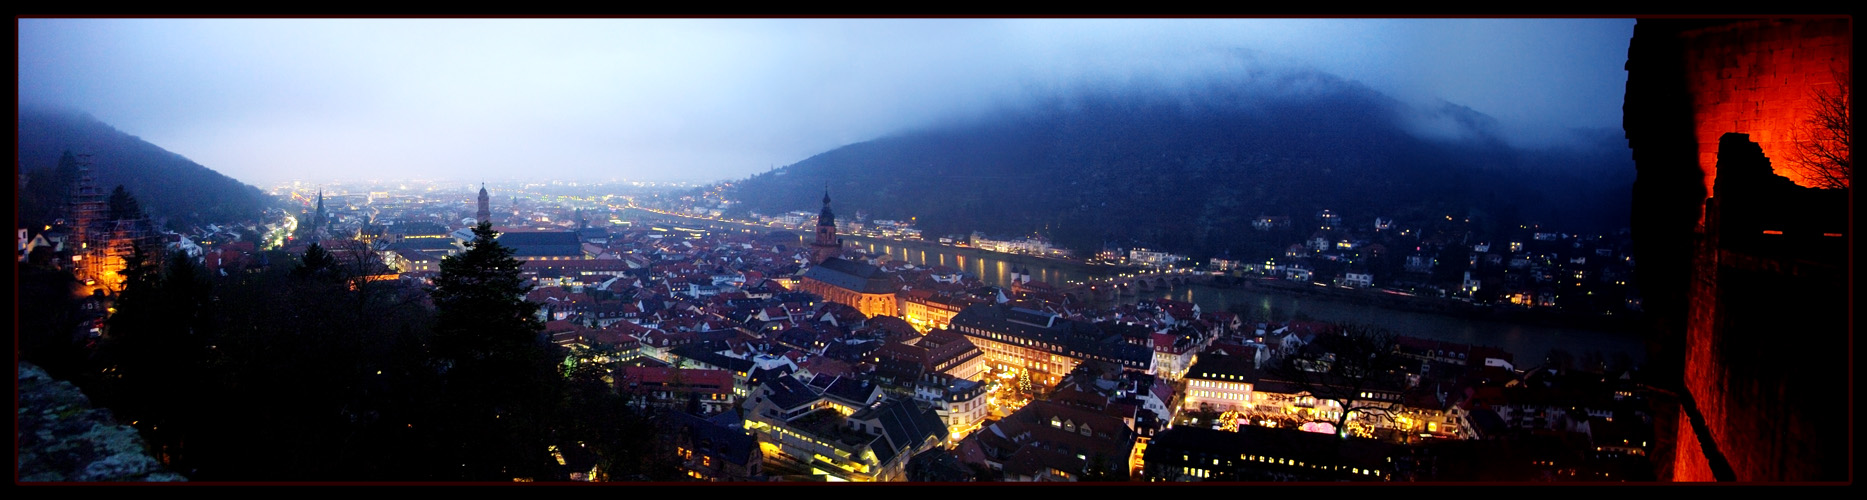 Weihnachten in Heidelberg - reloaded